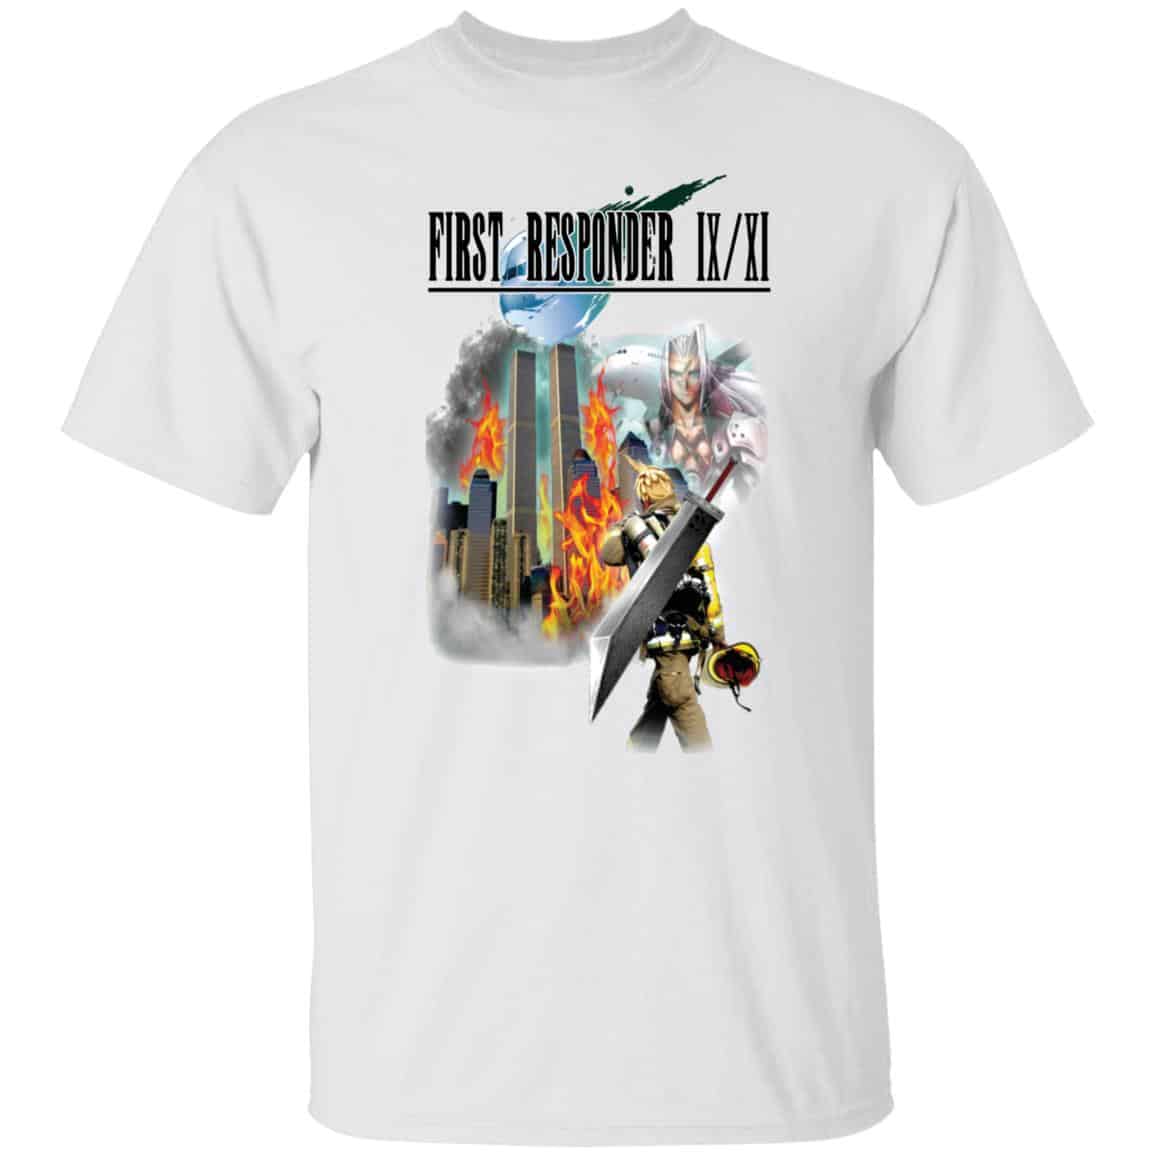 First Responder 9-11 Final Fantasy shirt